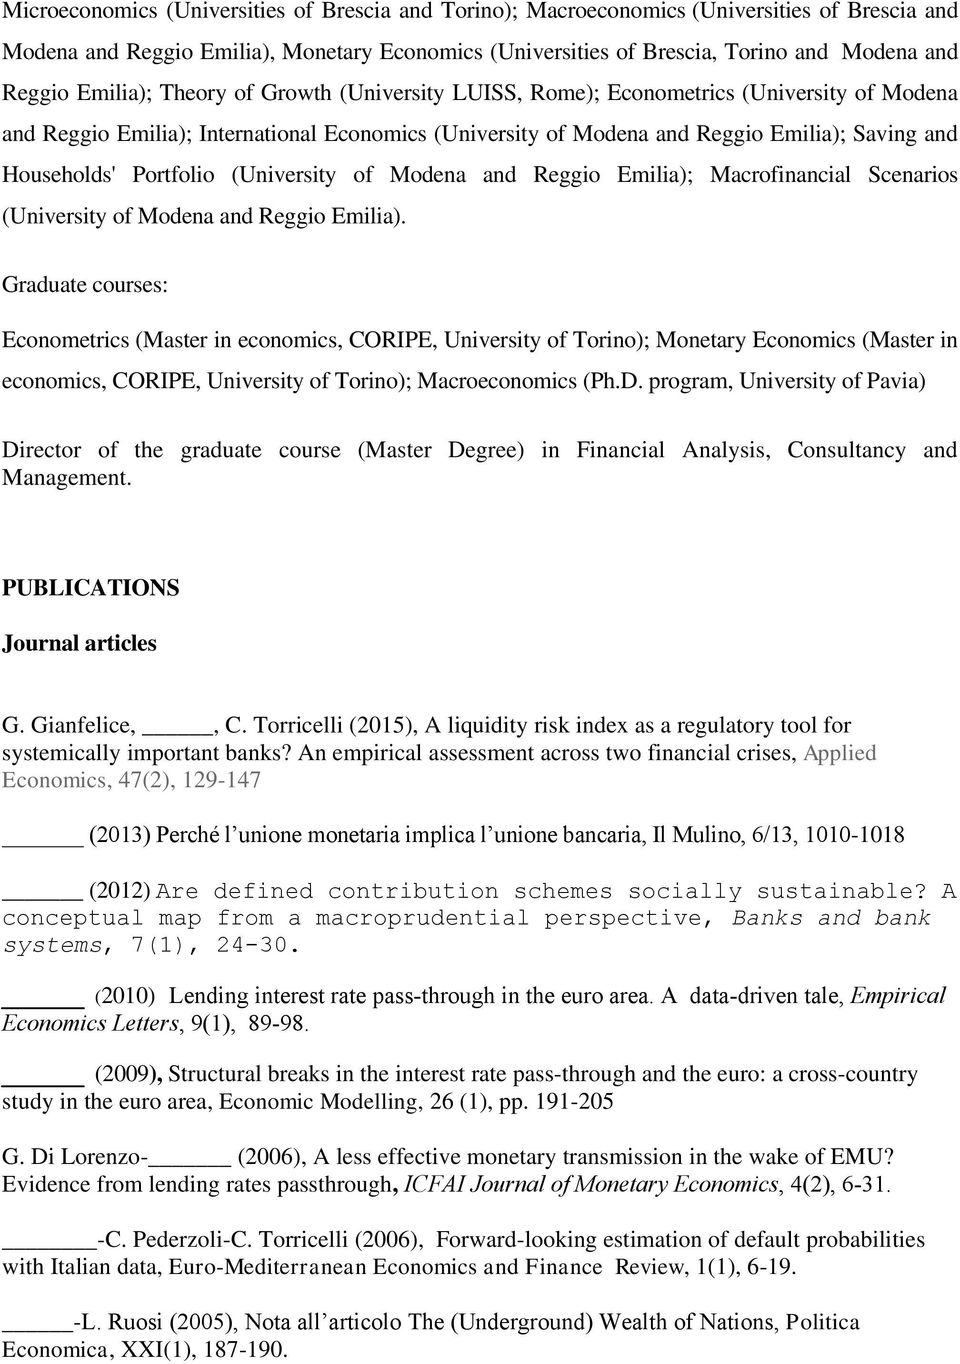 Portfolio (University of Modena and Reggio Emilia); Macrofinancial Scenarios (University of Modena and Reggio Emilia).